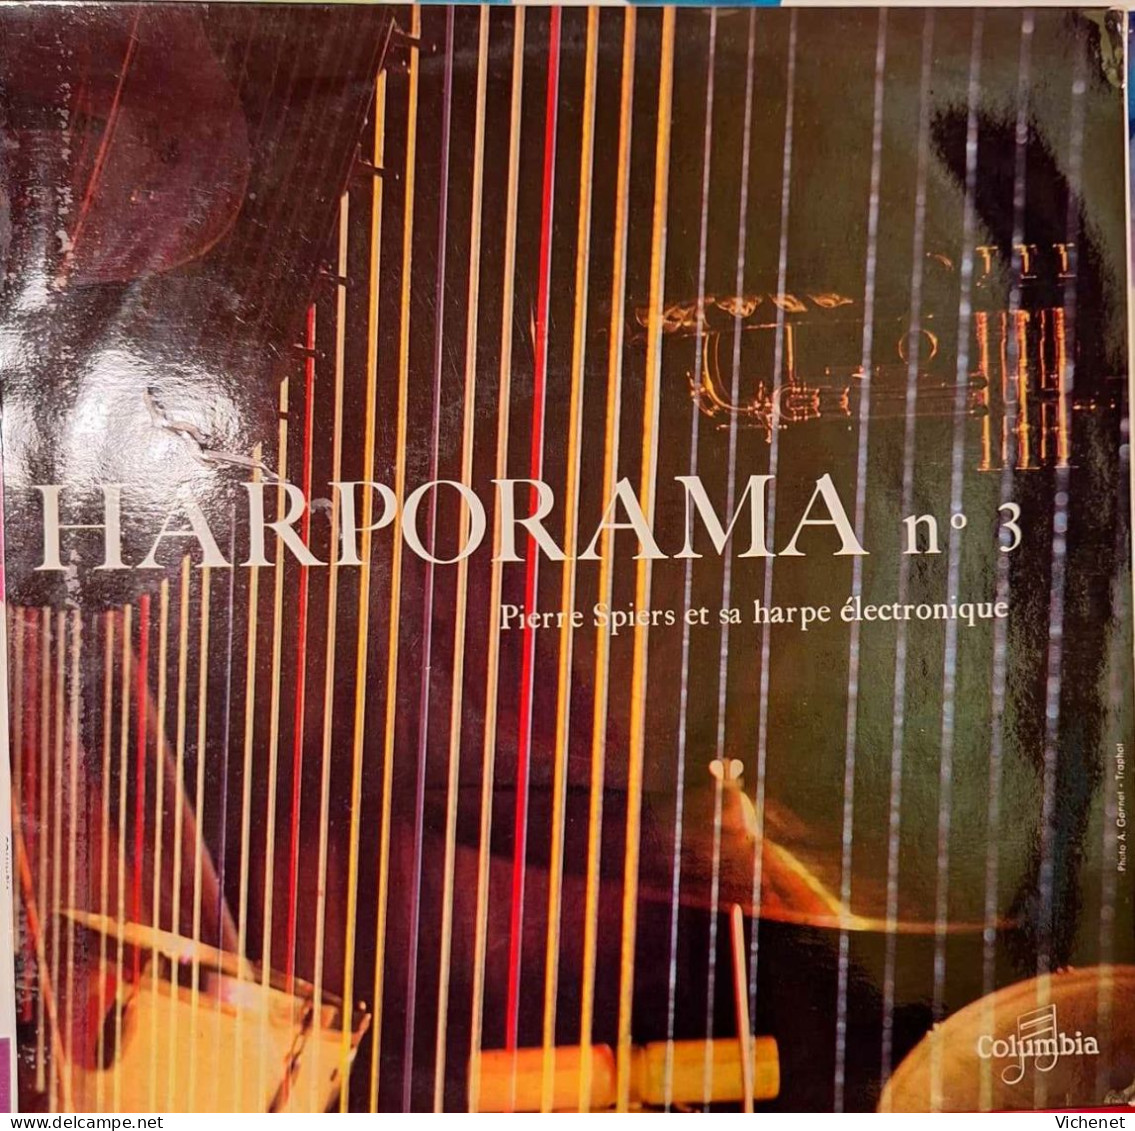 Pierre Spiers Et Sa Harpe Electronique - Harporama N° 3 - 25 Cm - Speciale Formaten